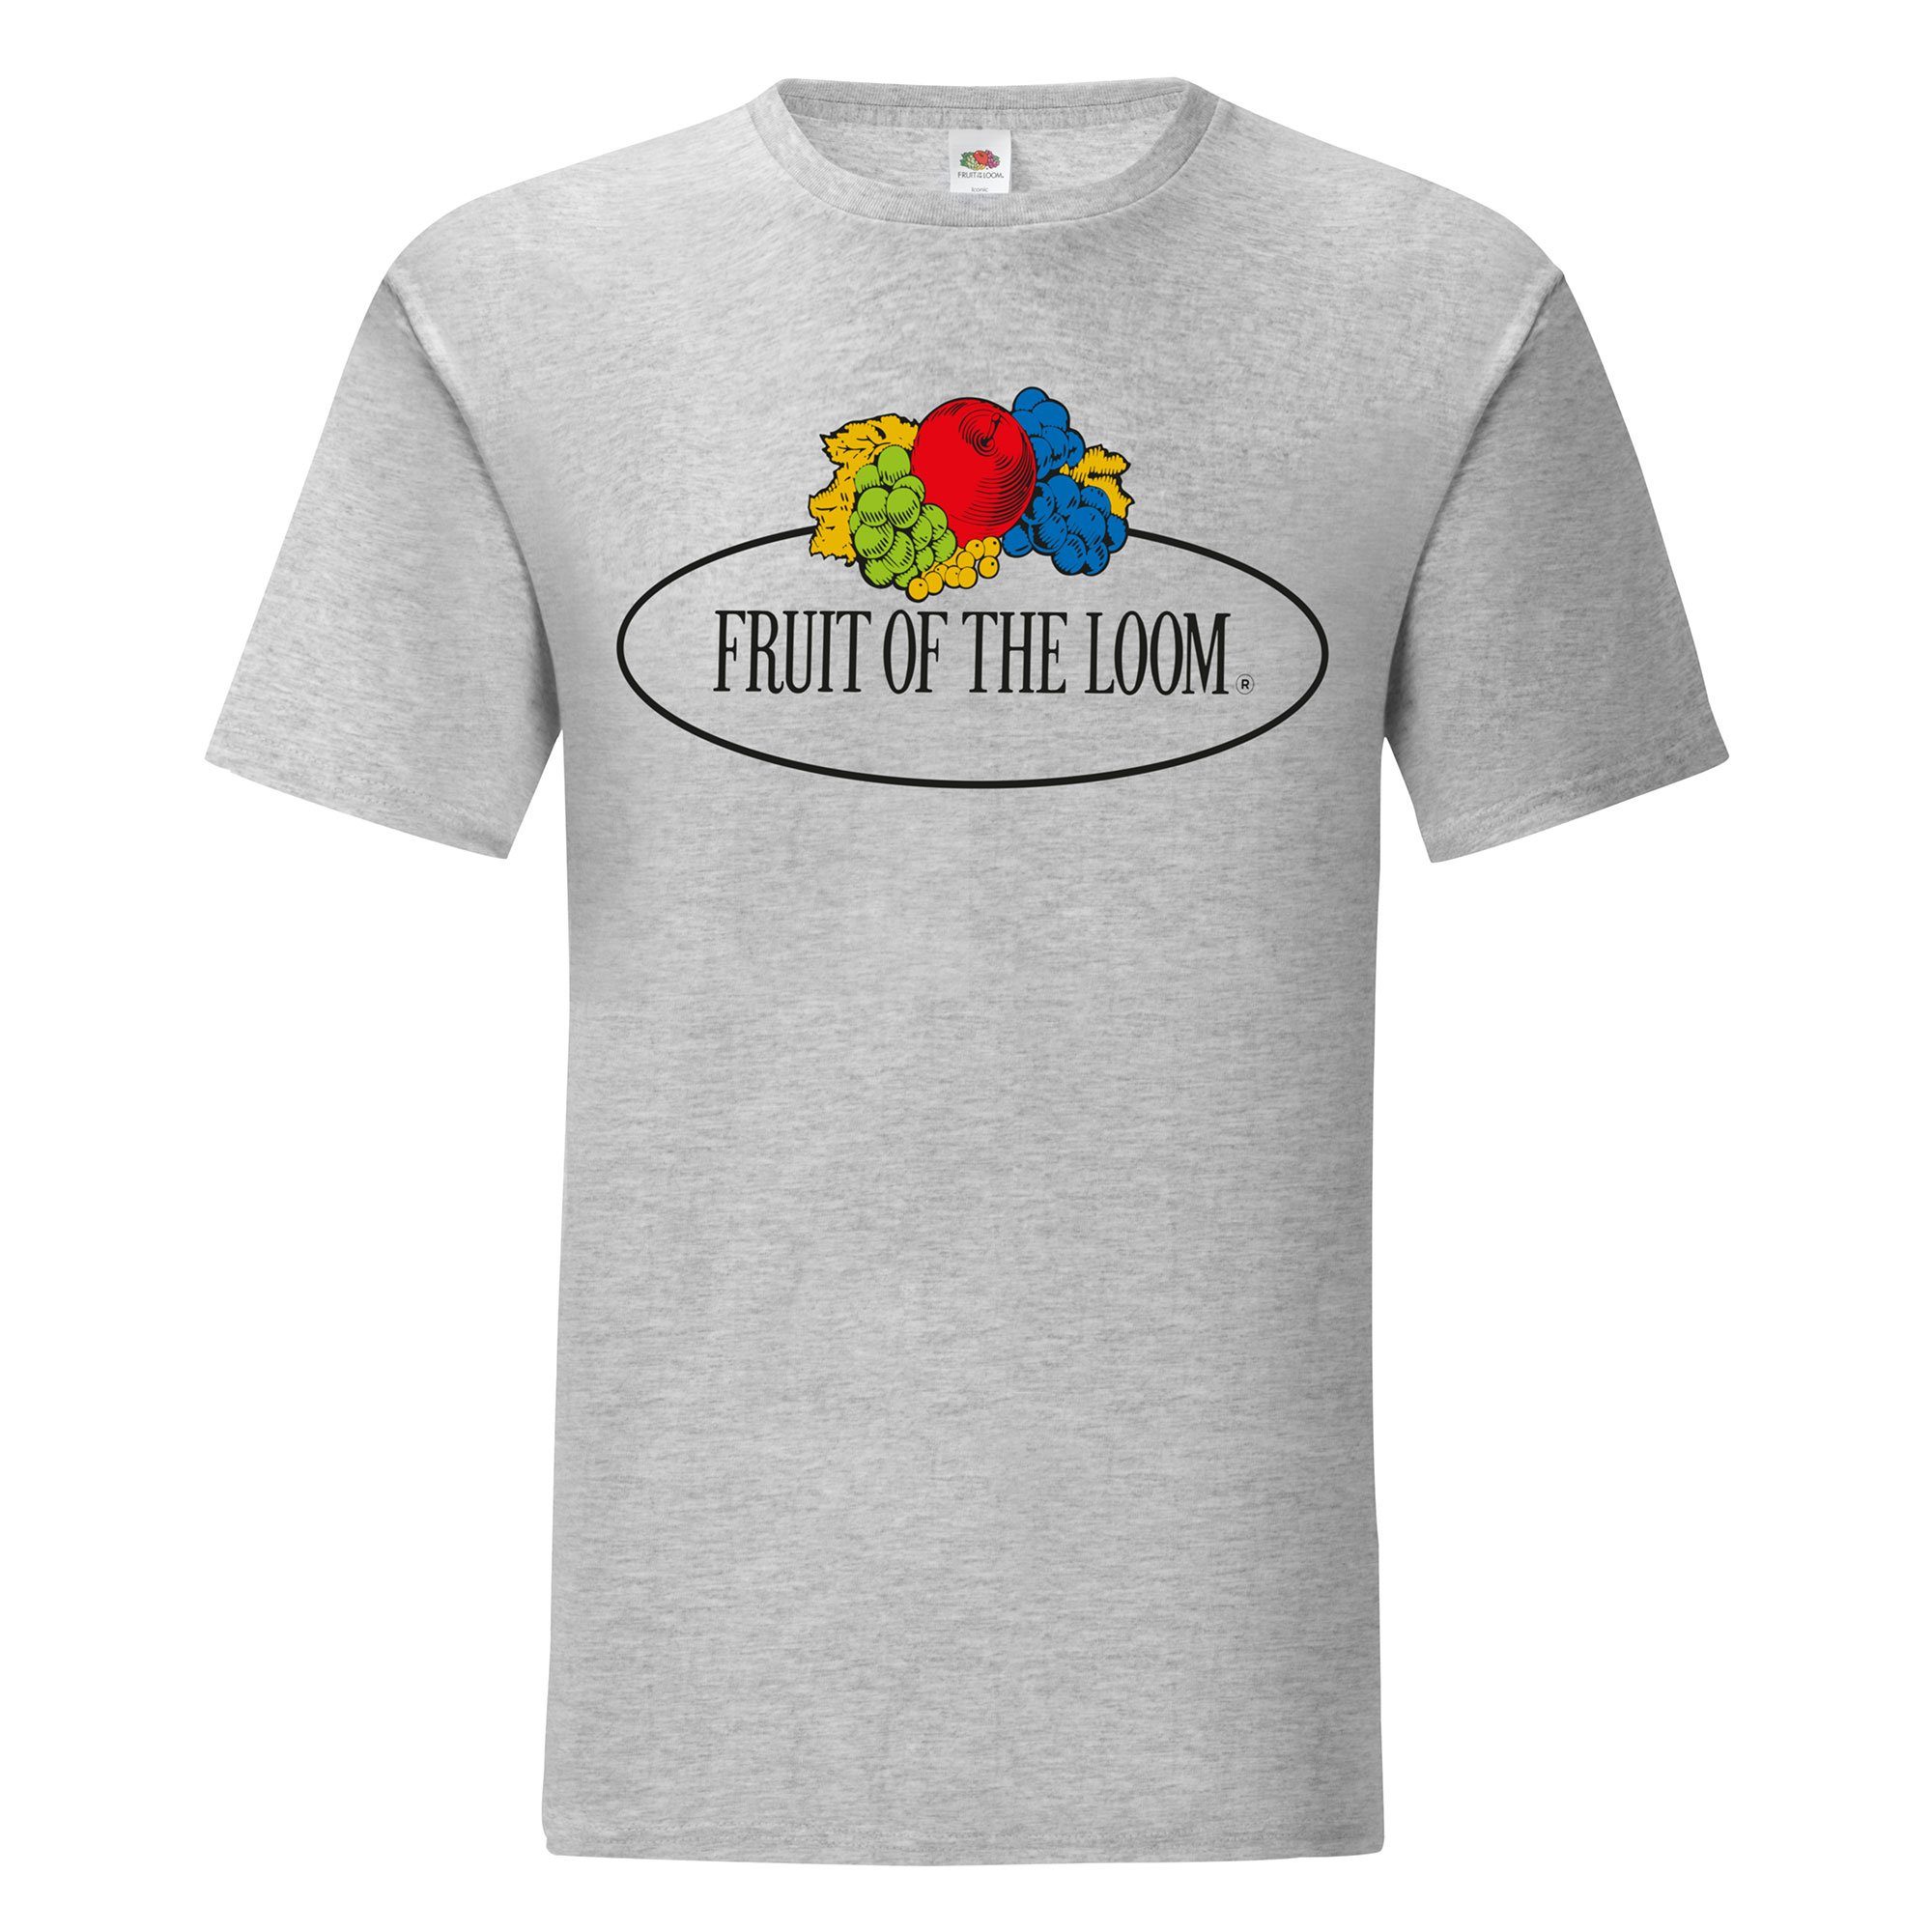 Loom graumeliert the Vintage-Logo Rundhalsshirt T-Shirt groß 150 Iconic - of Fruit